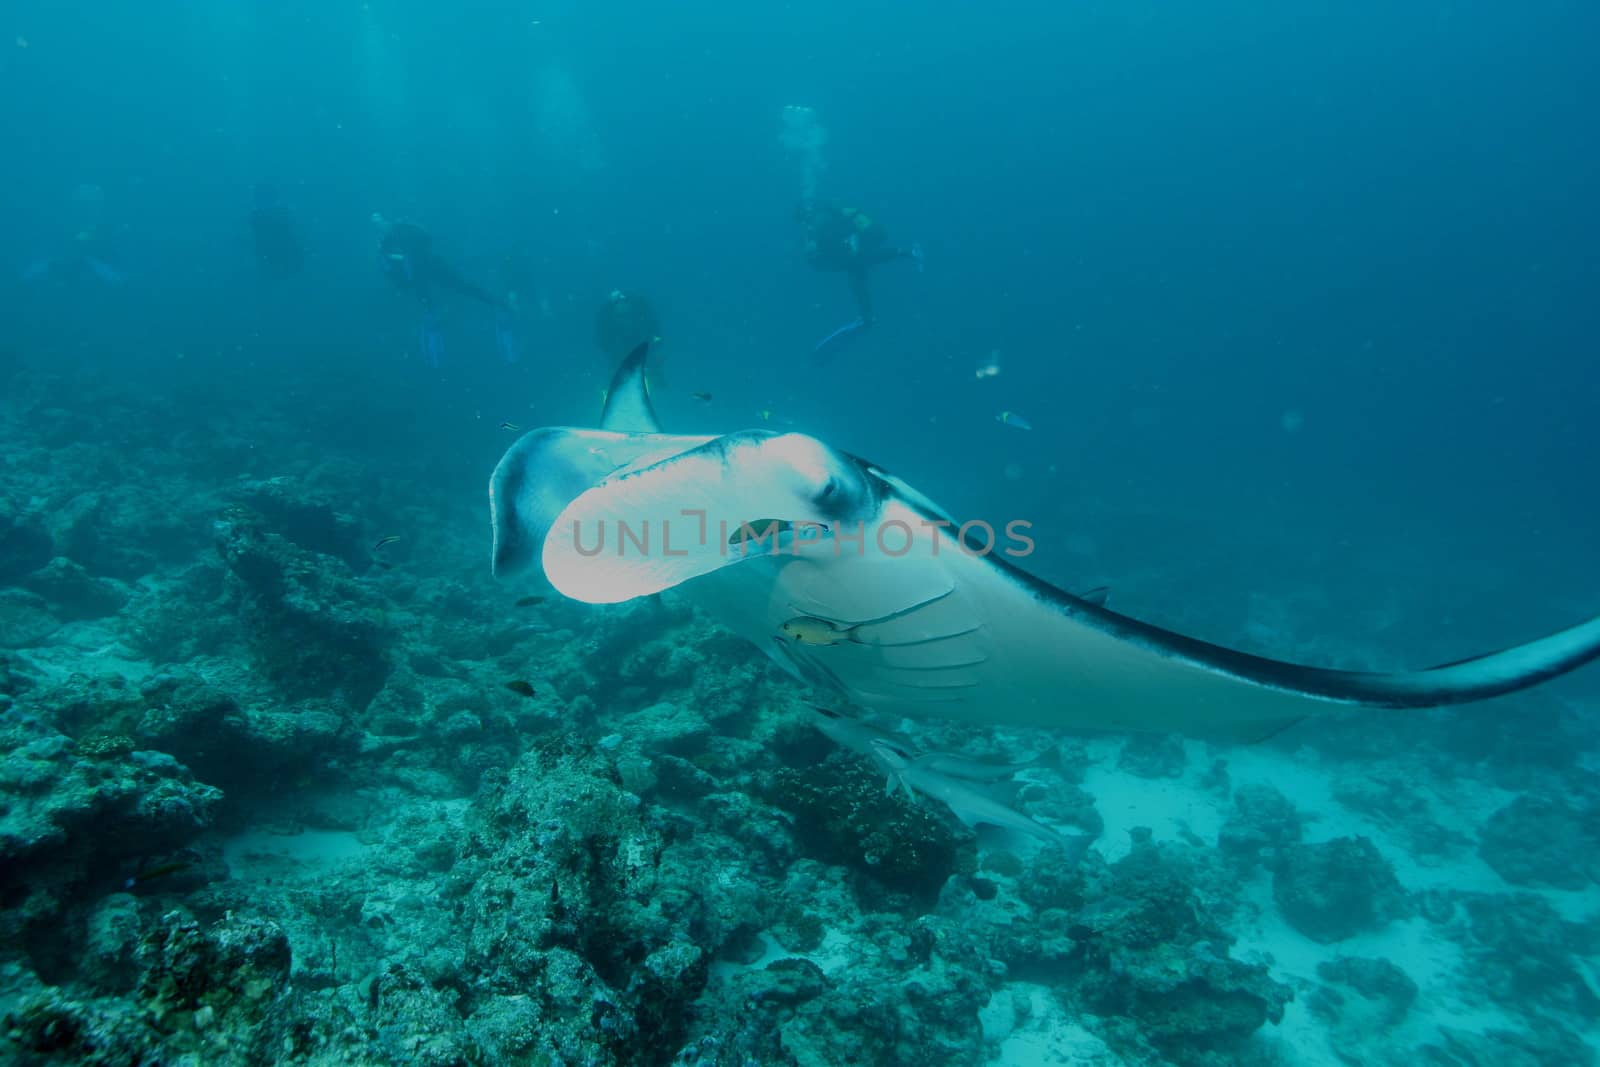 Manta Ray underwater diving photo Maldives Indian Ocean